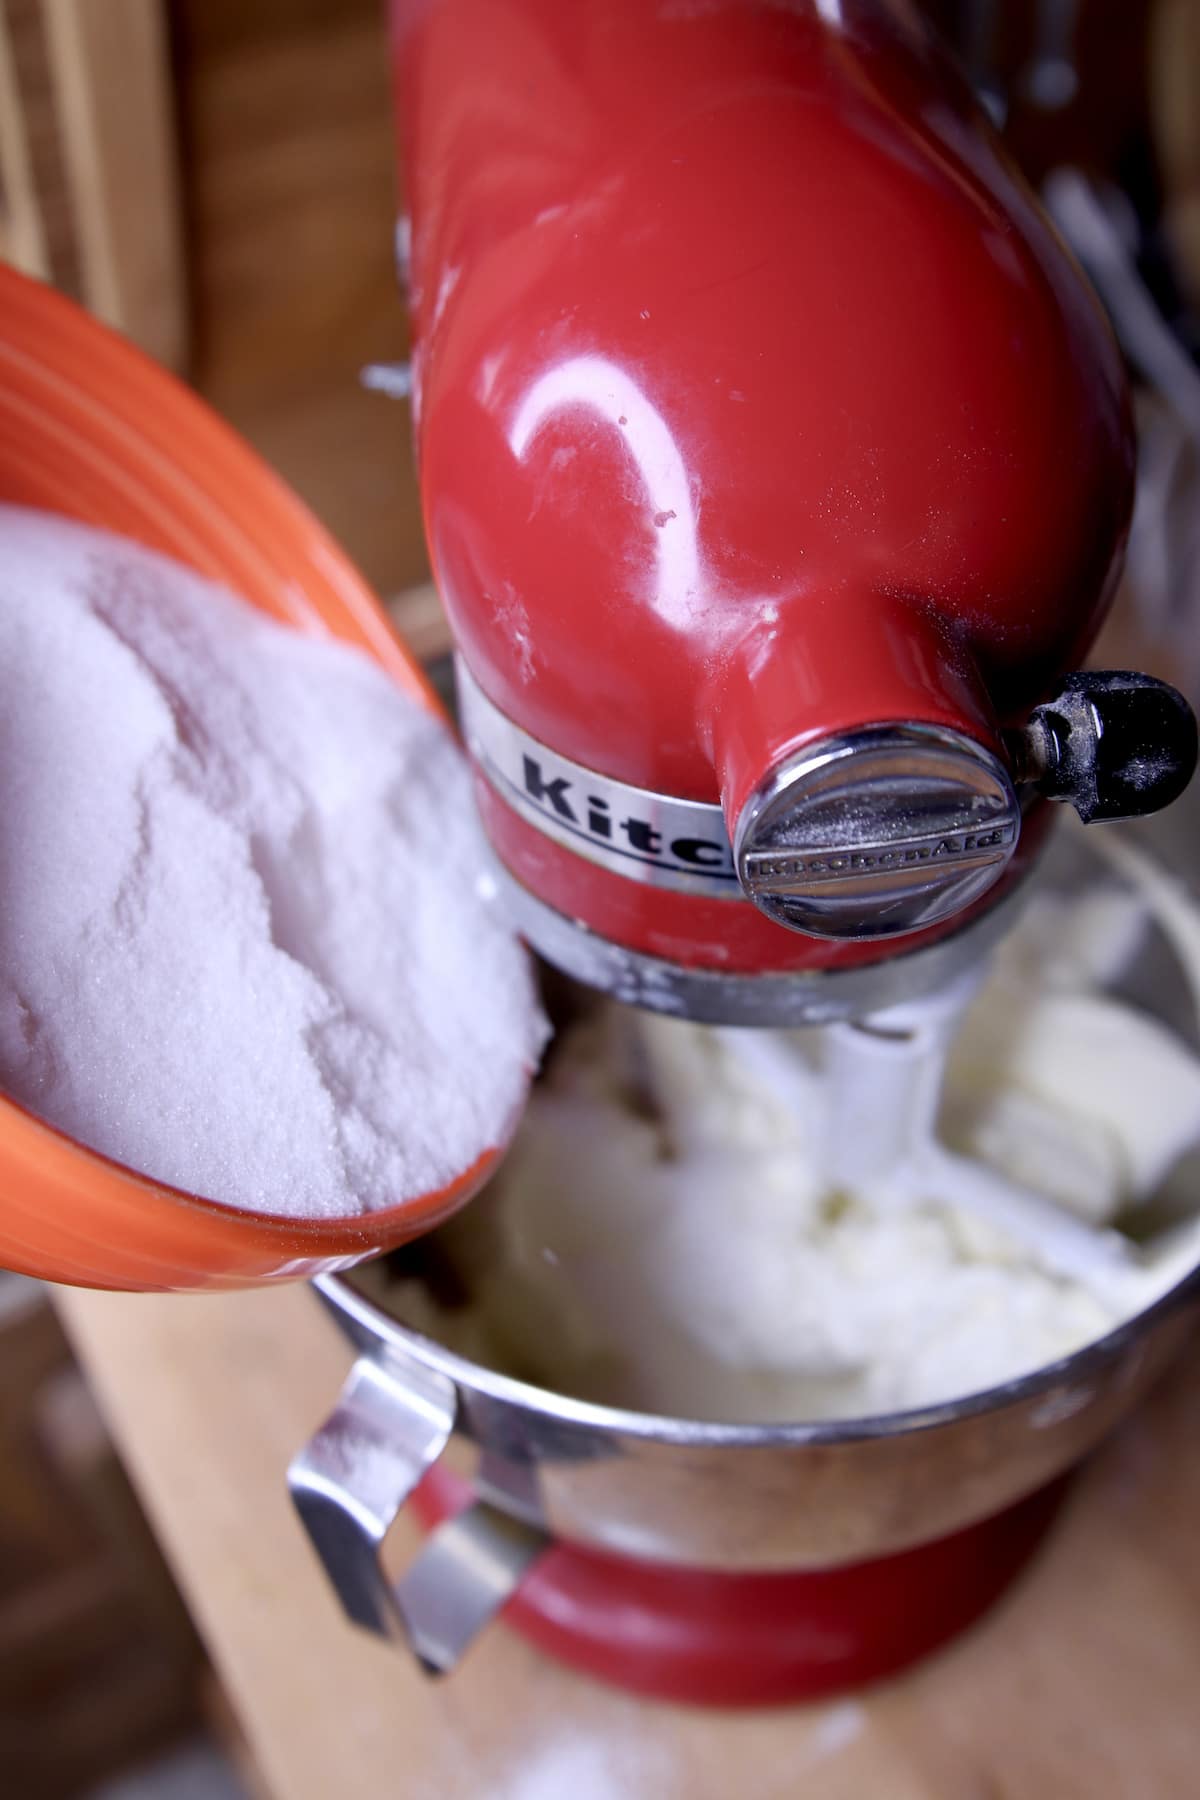 Adding sugar to mixer bowl.